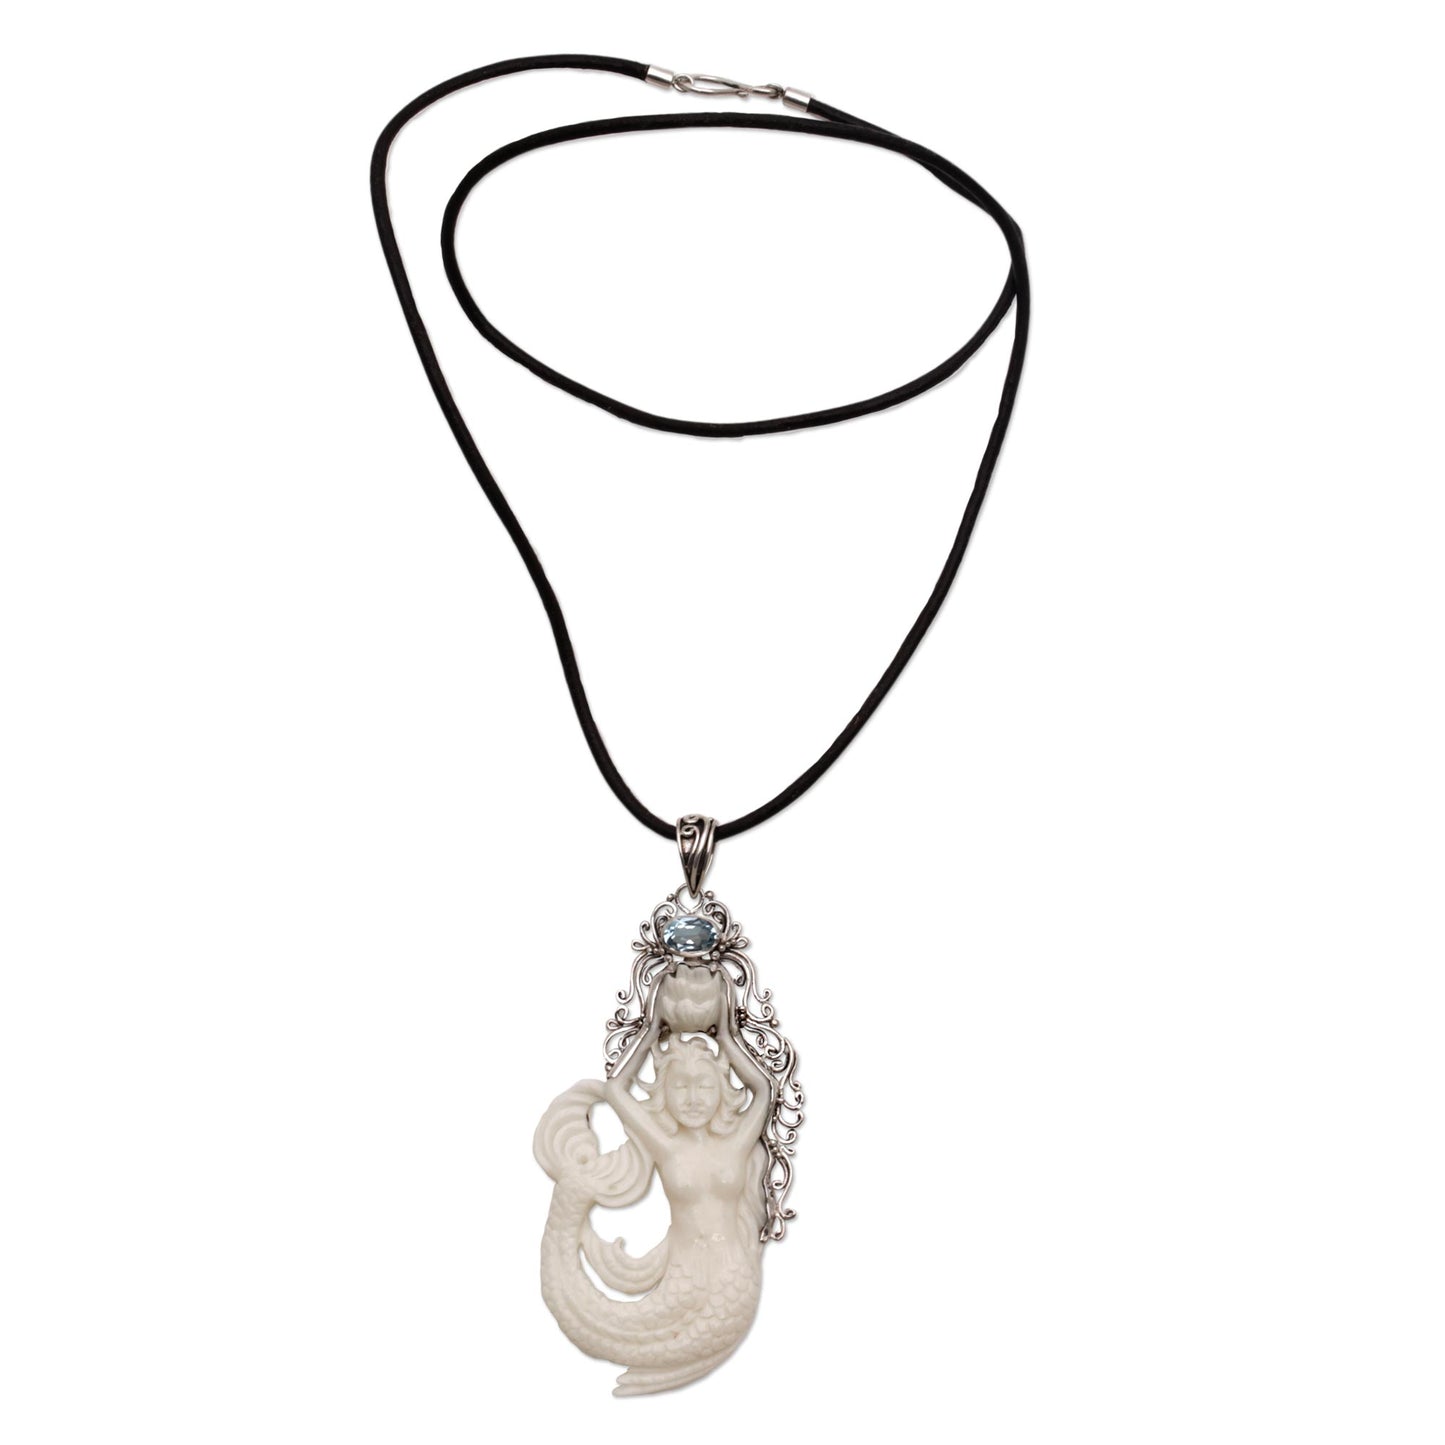 Mermaid Fantasy Leather Pendant Necklace